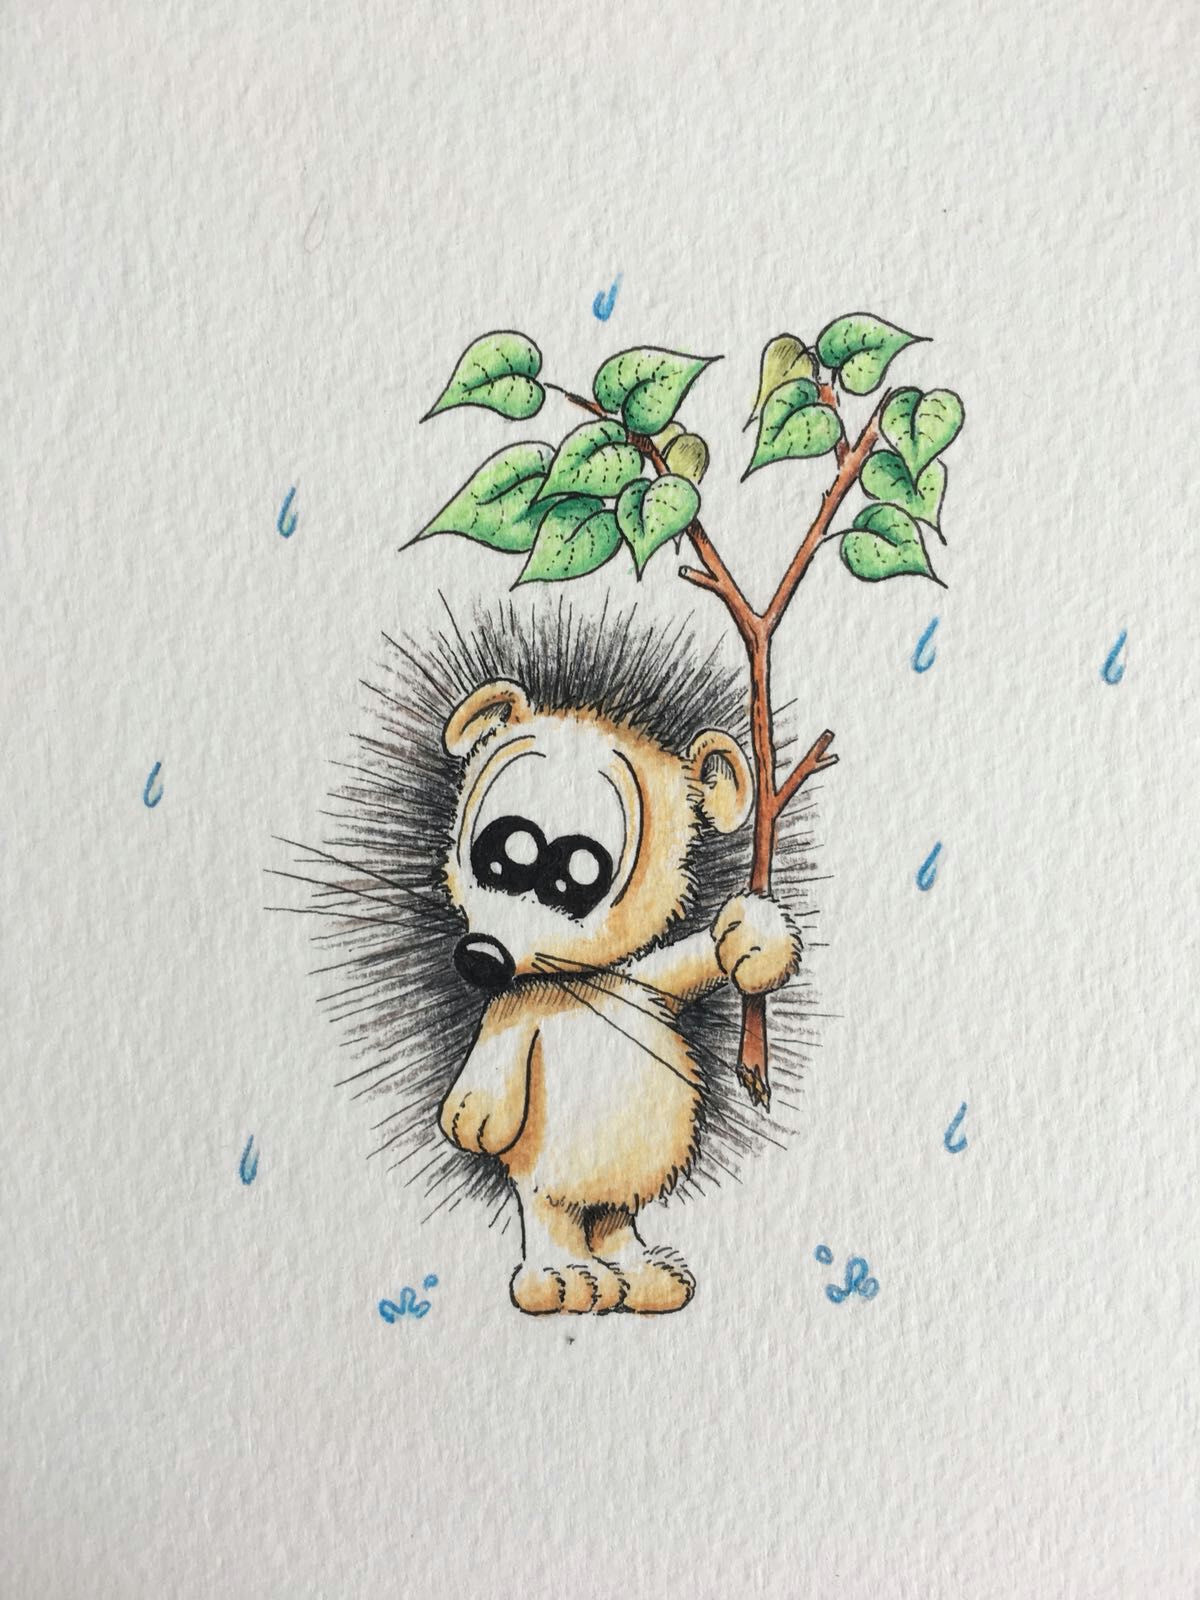 Baby Cute Animal Drawings Hedgehog Illustration Apredart Drawings Rain Animals